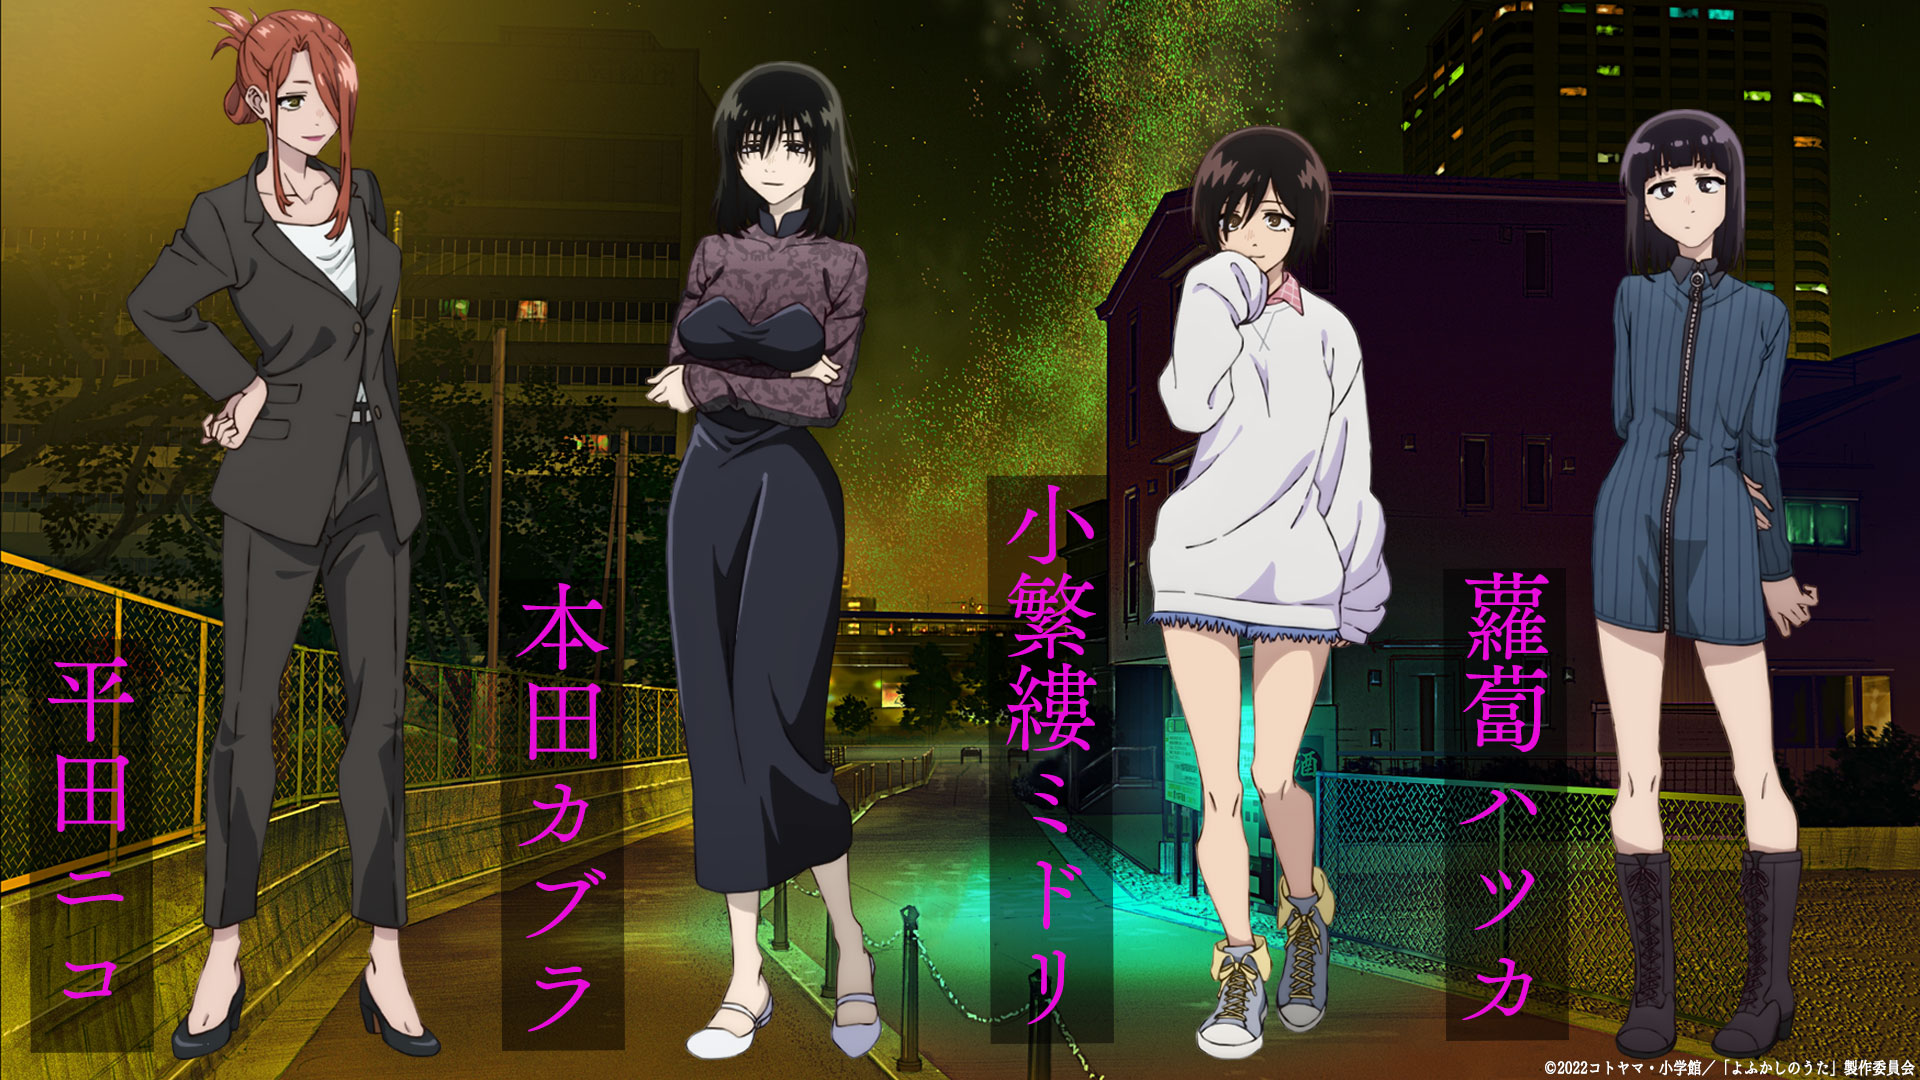 ▷ The anime Yofukashi no Uta reveals its premiere date with a new trailer 〜  Anime Sweet 💕